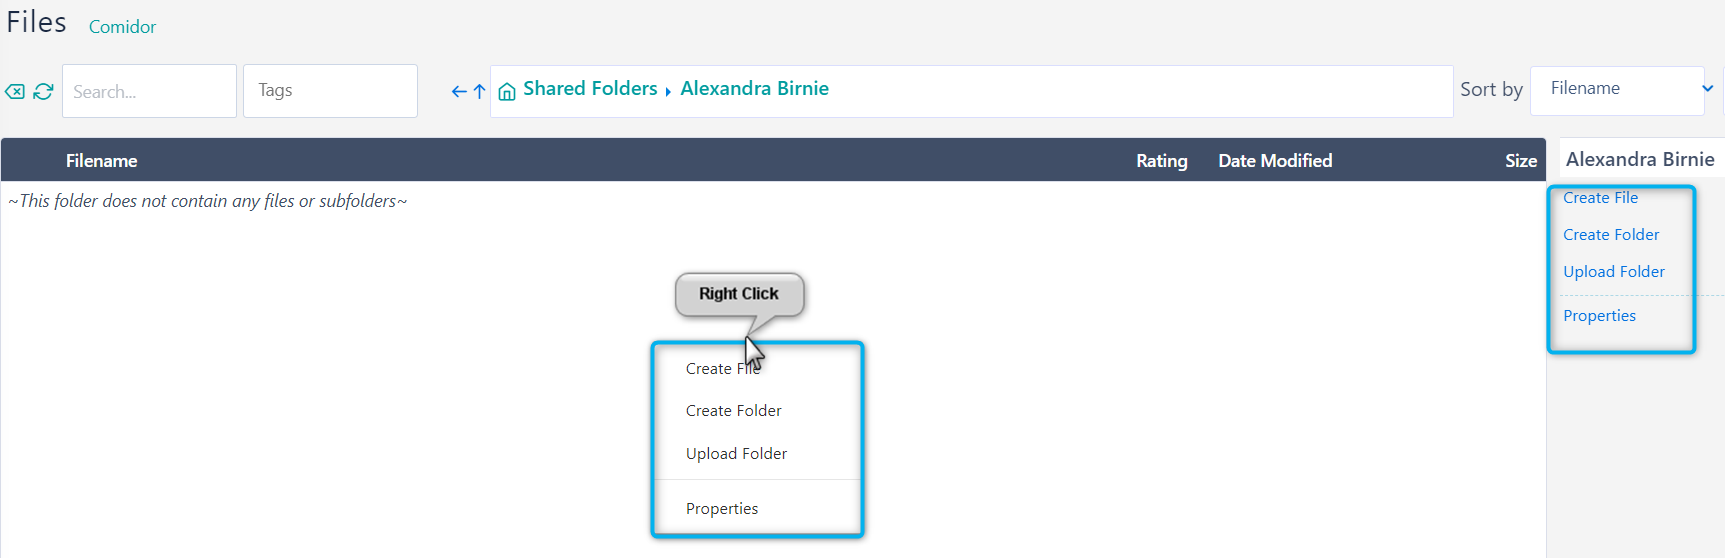 create file- folder v.6.2| Comidor Platform